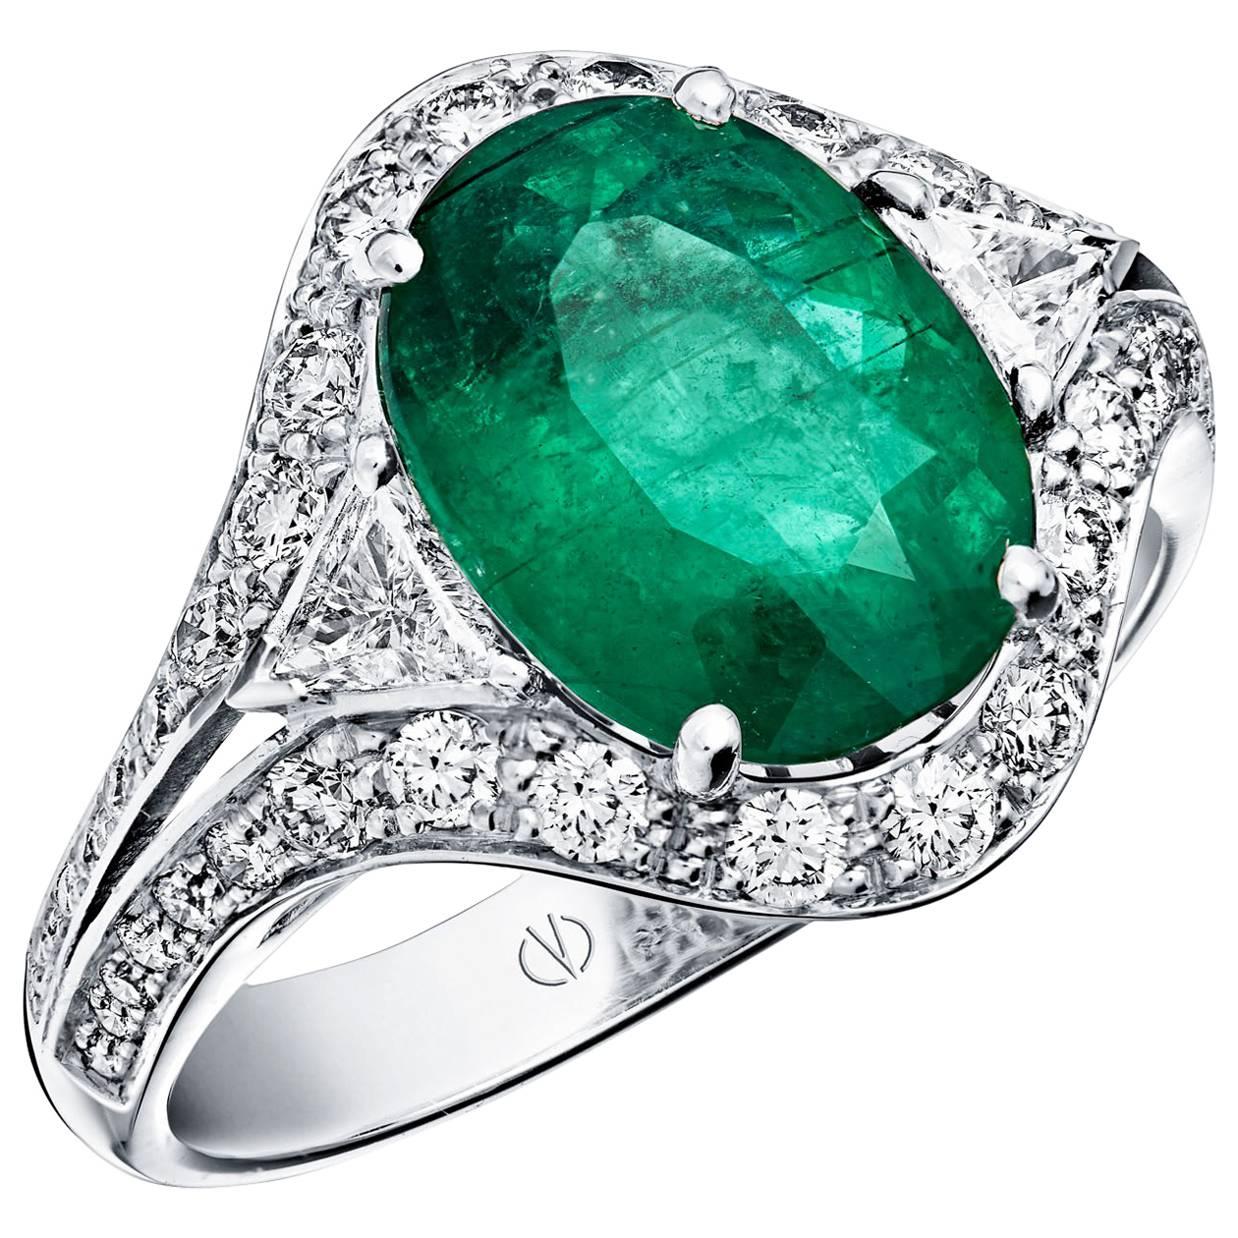 2.53 Carat Emerald Art Deco Diamond Ring by Valerie Danenberg For Sale